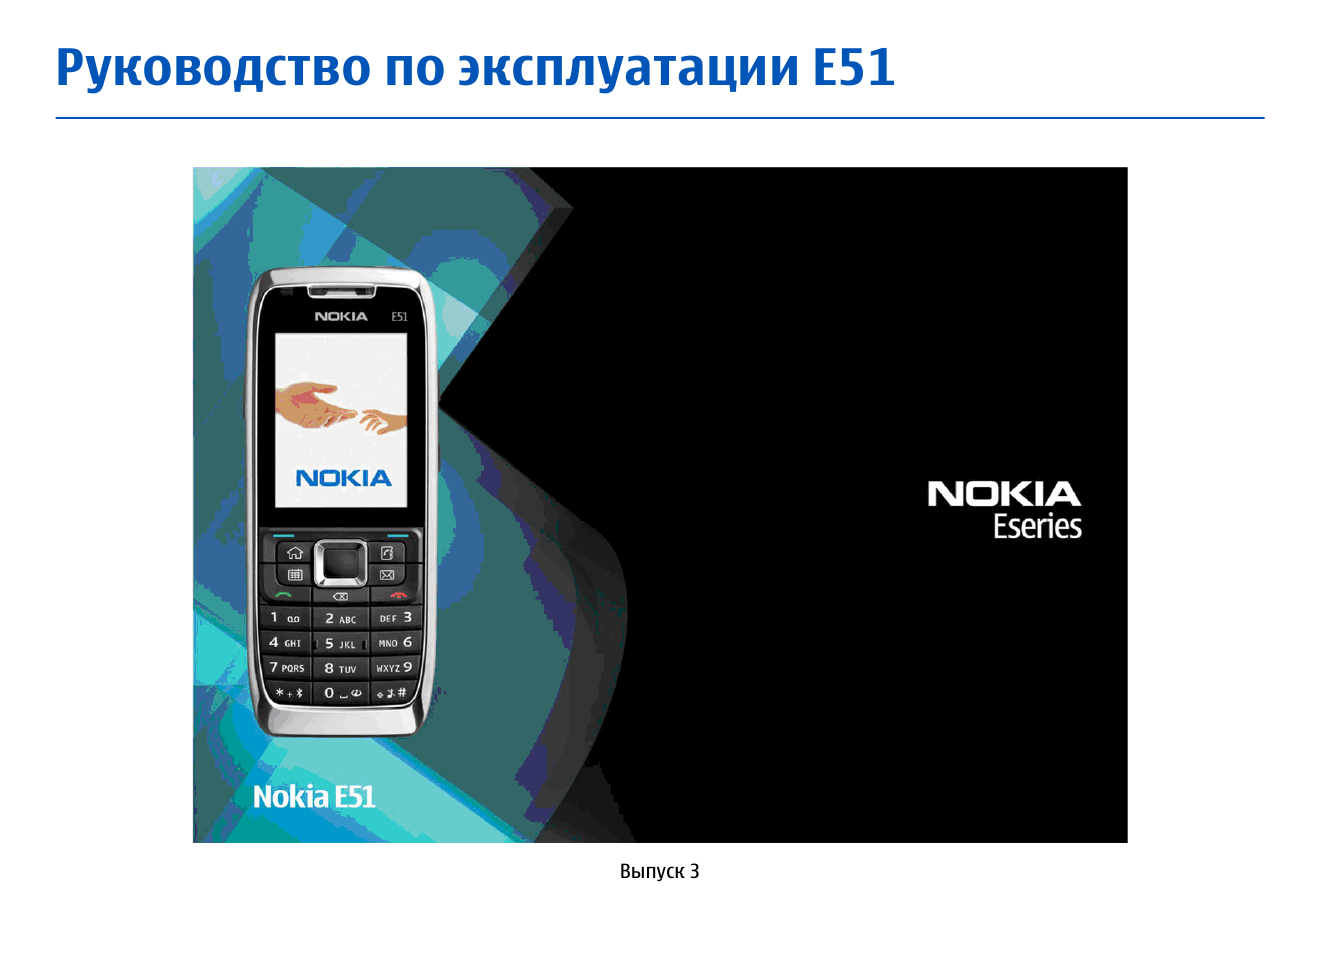 Телефоны нокиа инструкция. Nokia e51 Black. Nokia e51-1. Нокиа 51. Мобильный телефон Nokia инструкция по эксплуатации.